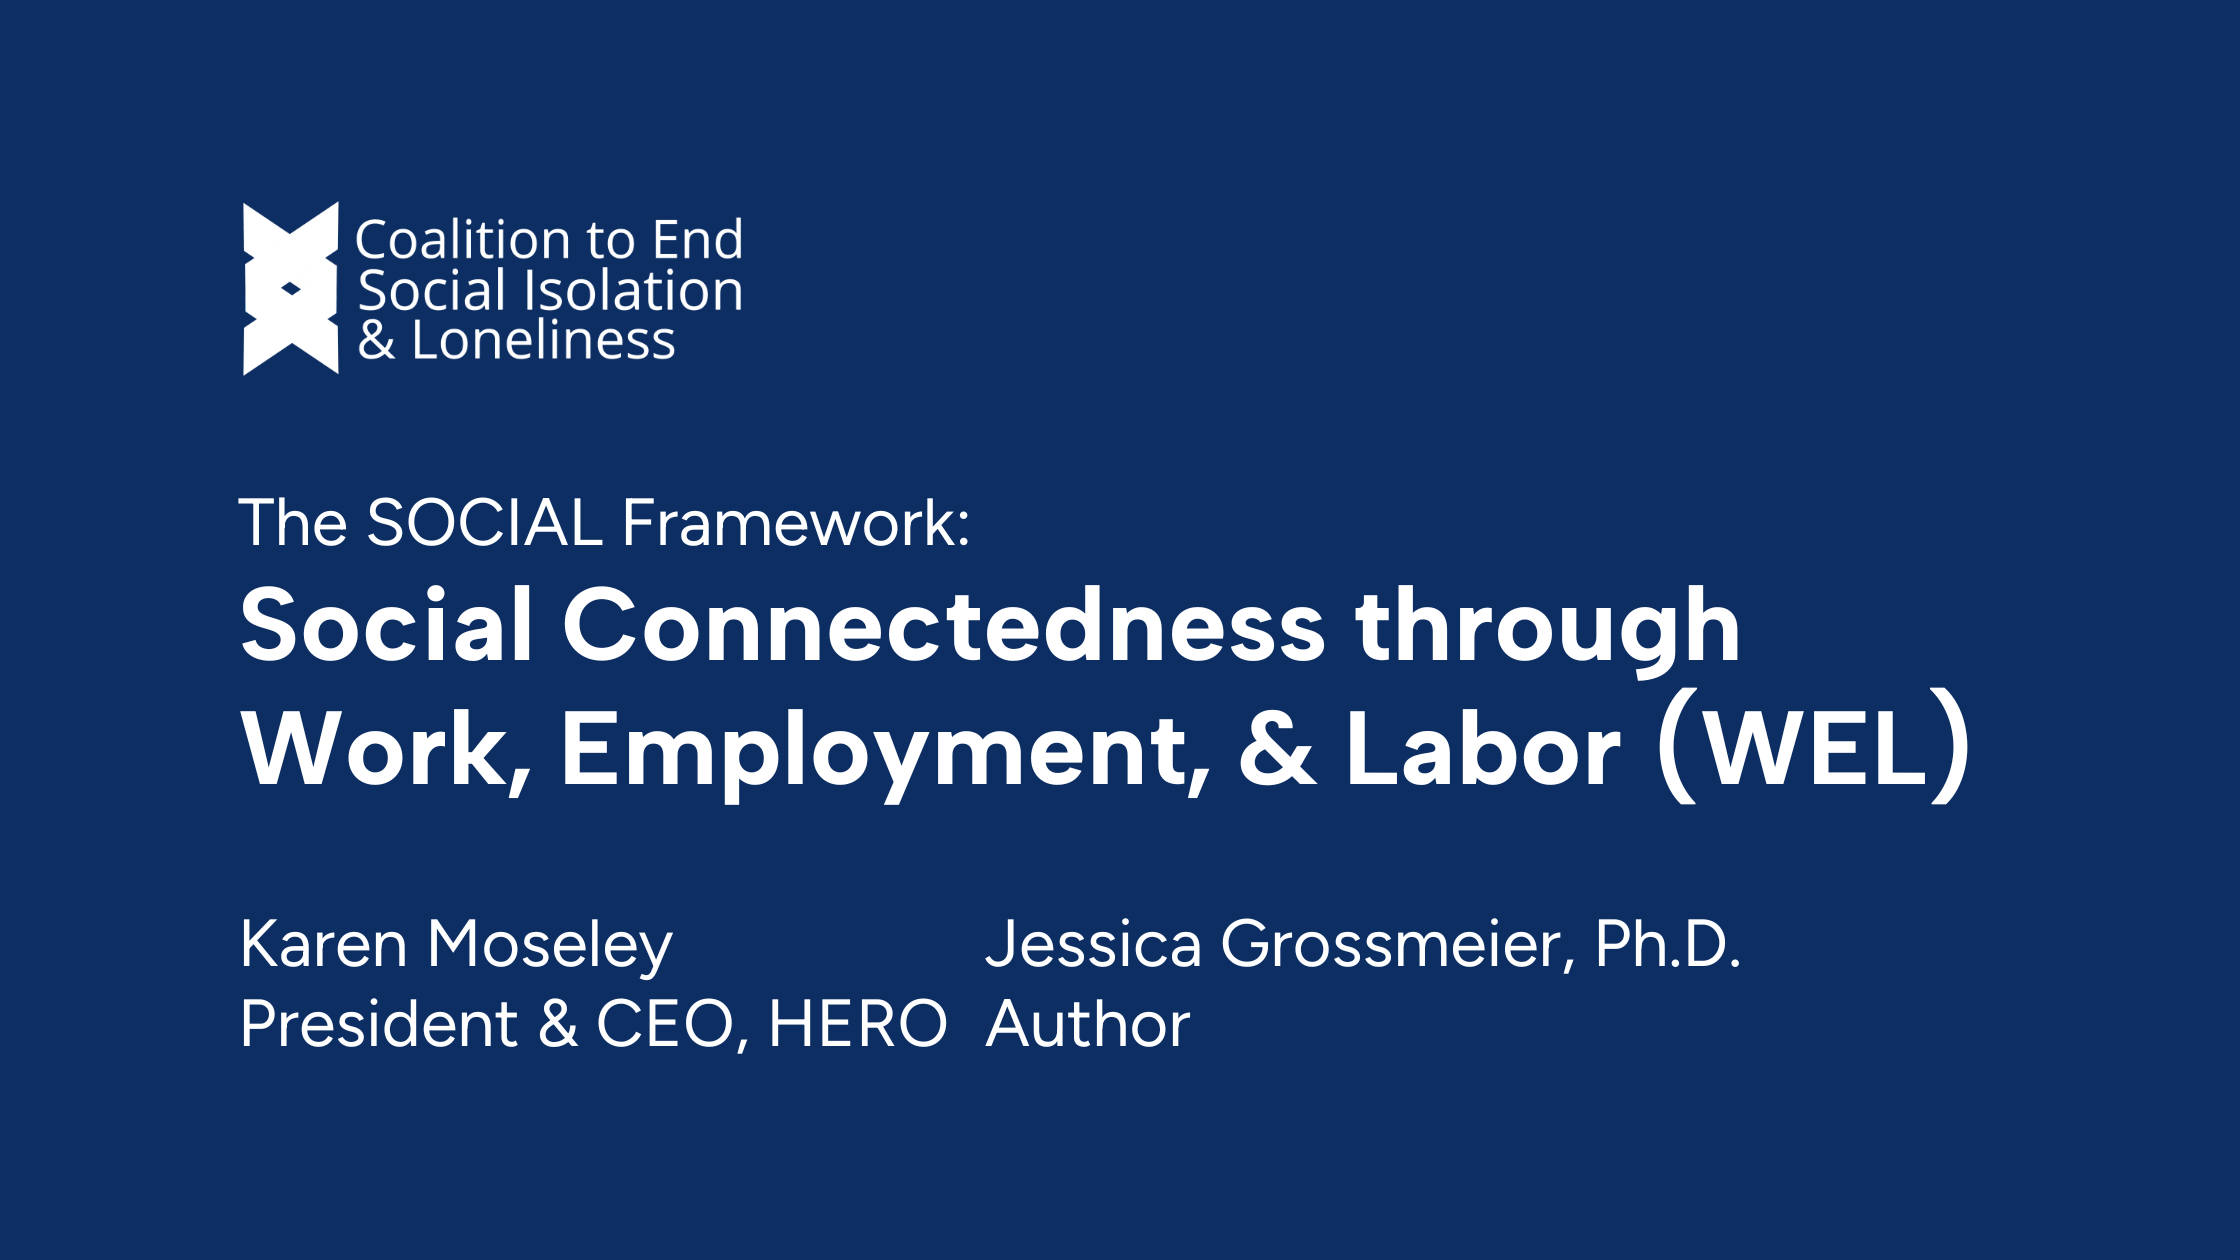 Social Connectedness through Work, Employment, & Labor (WEL)